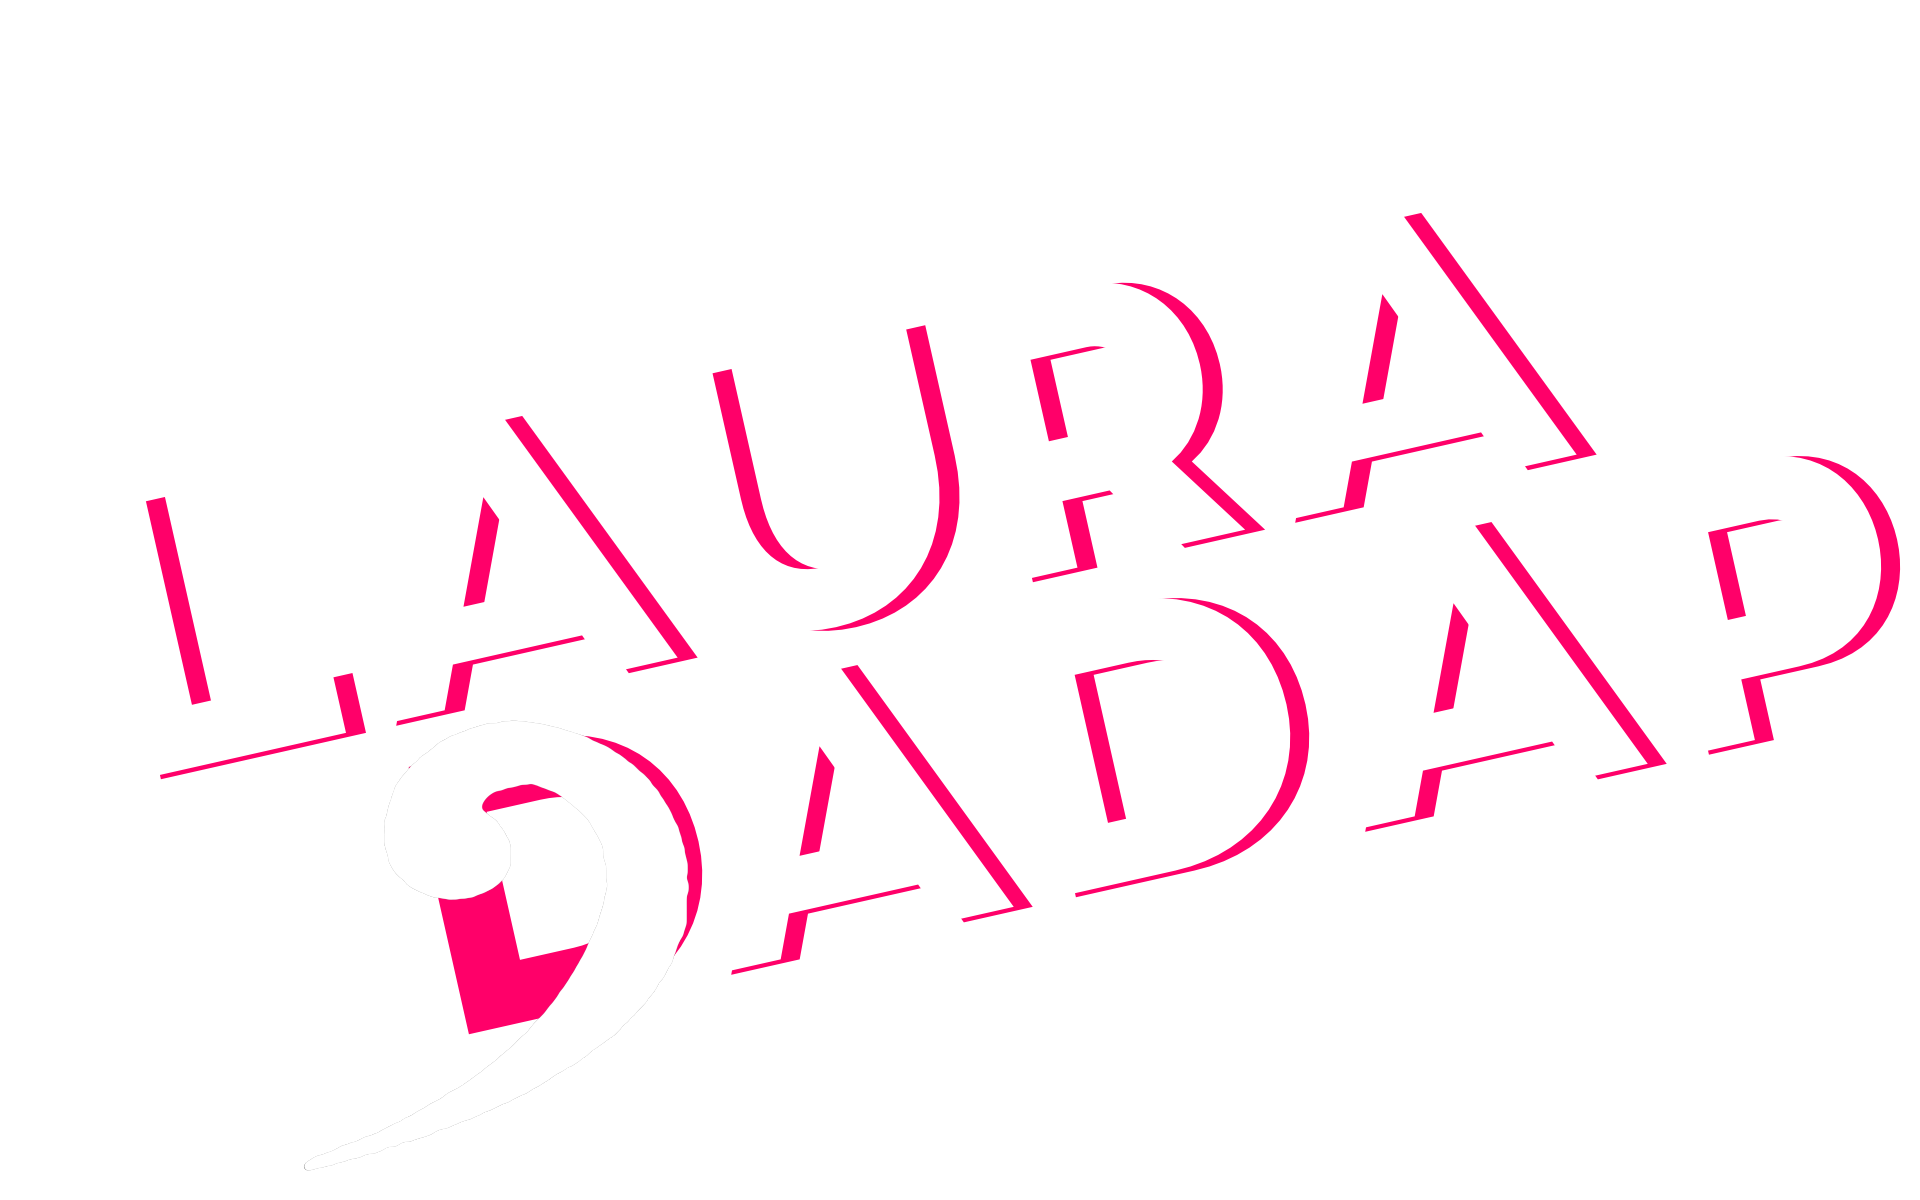 Laura Dadap